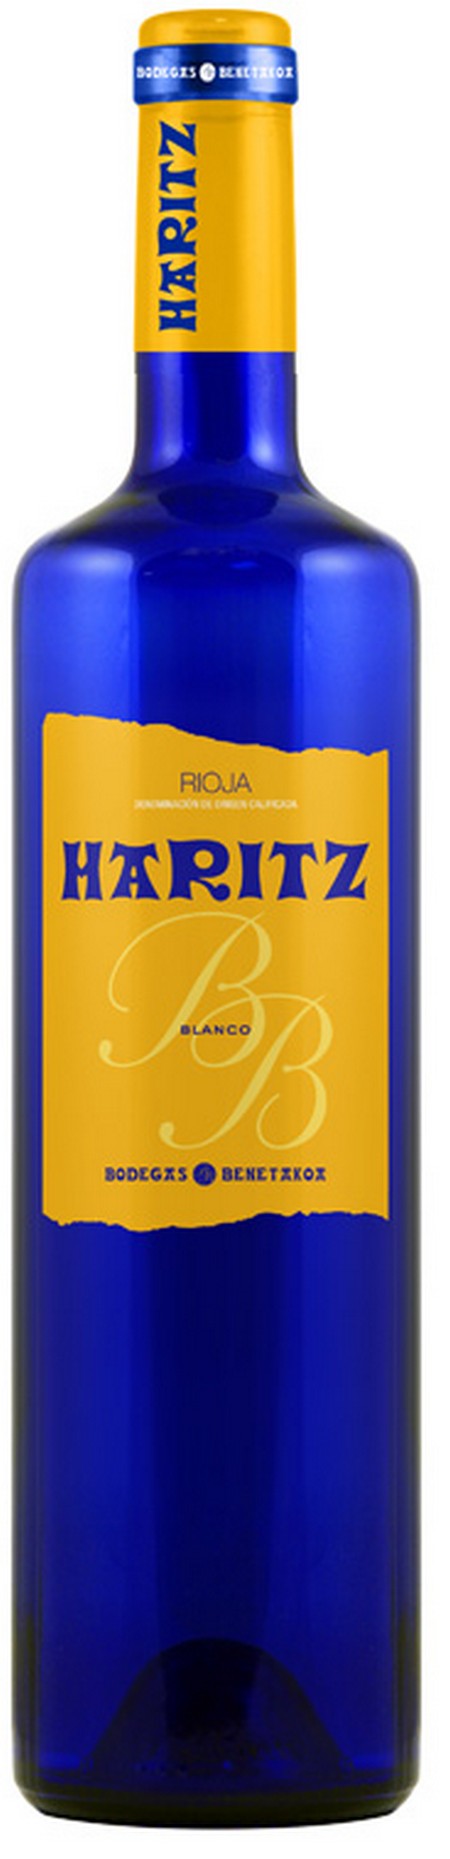 haritz-blanco-2013